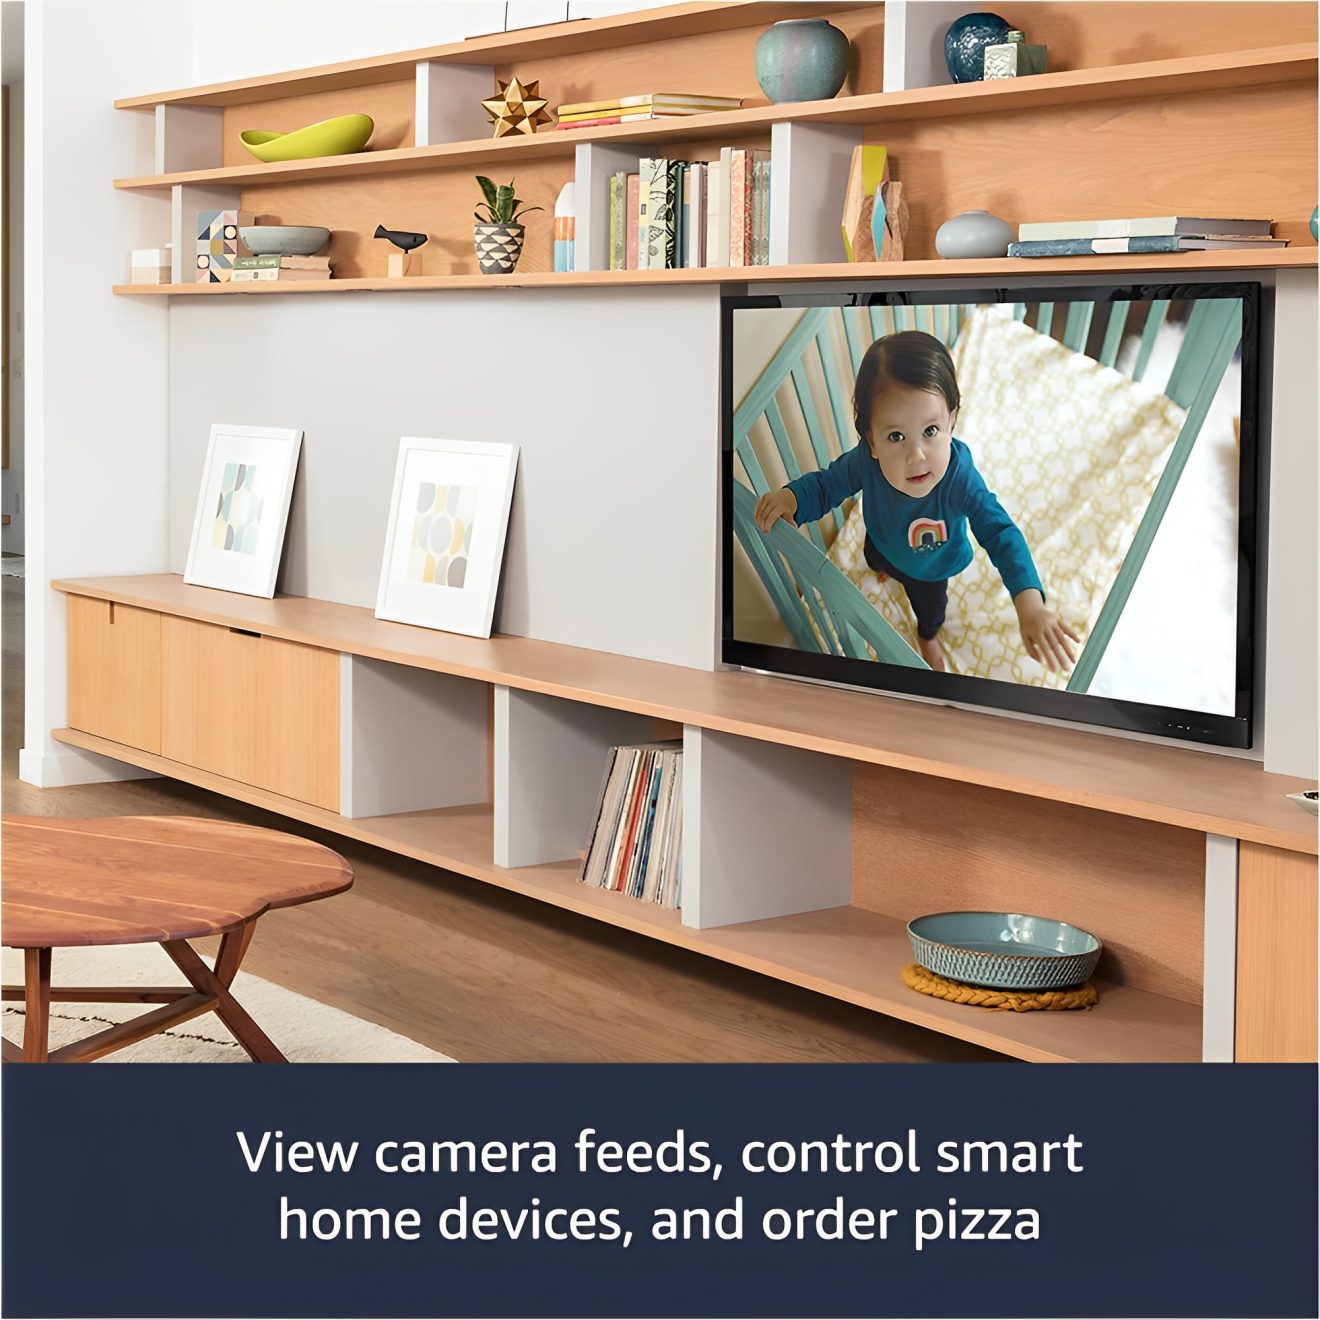 Buy Amazon Fire Tv Stick 4K online at the Best Price in Bangladesh Gadget Grage BD. 